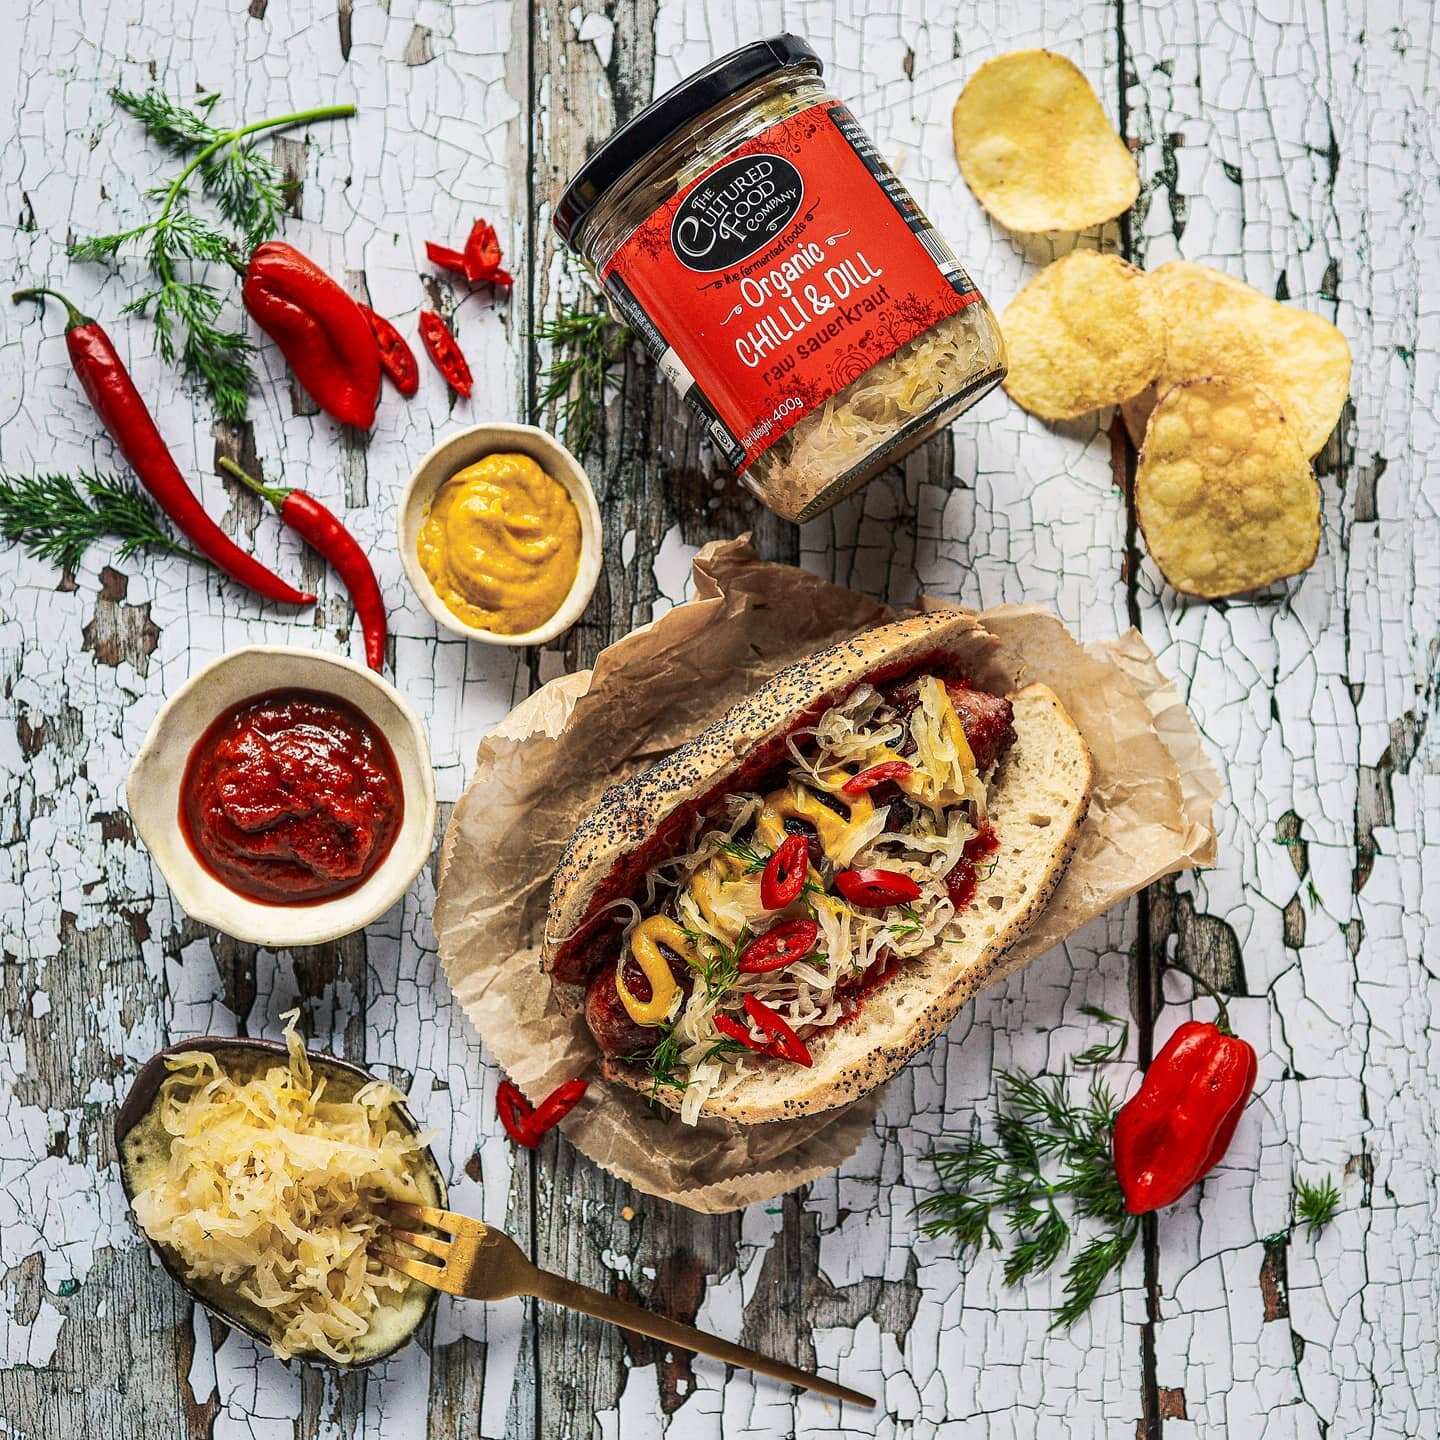 Organic Chilli &amp; Dill Sauerkraut. Works perfect in a spicy hot dog with mustard. 🌭

#fermentedfoods #sauerkraut #probiotic #guthealth #gutbacteria